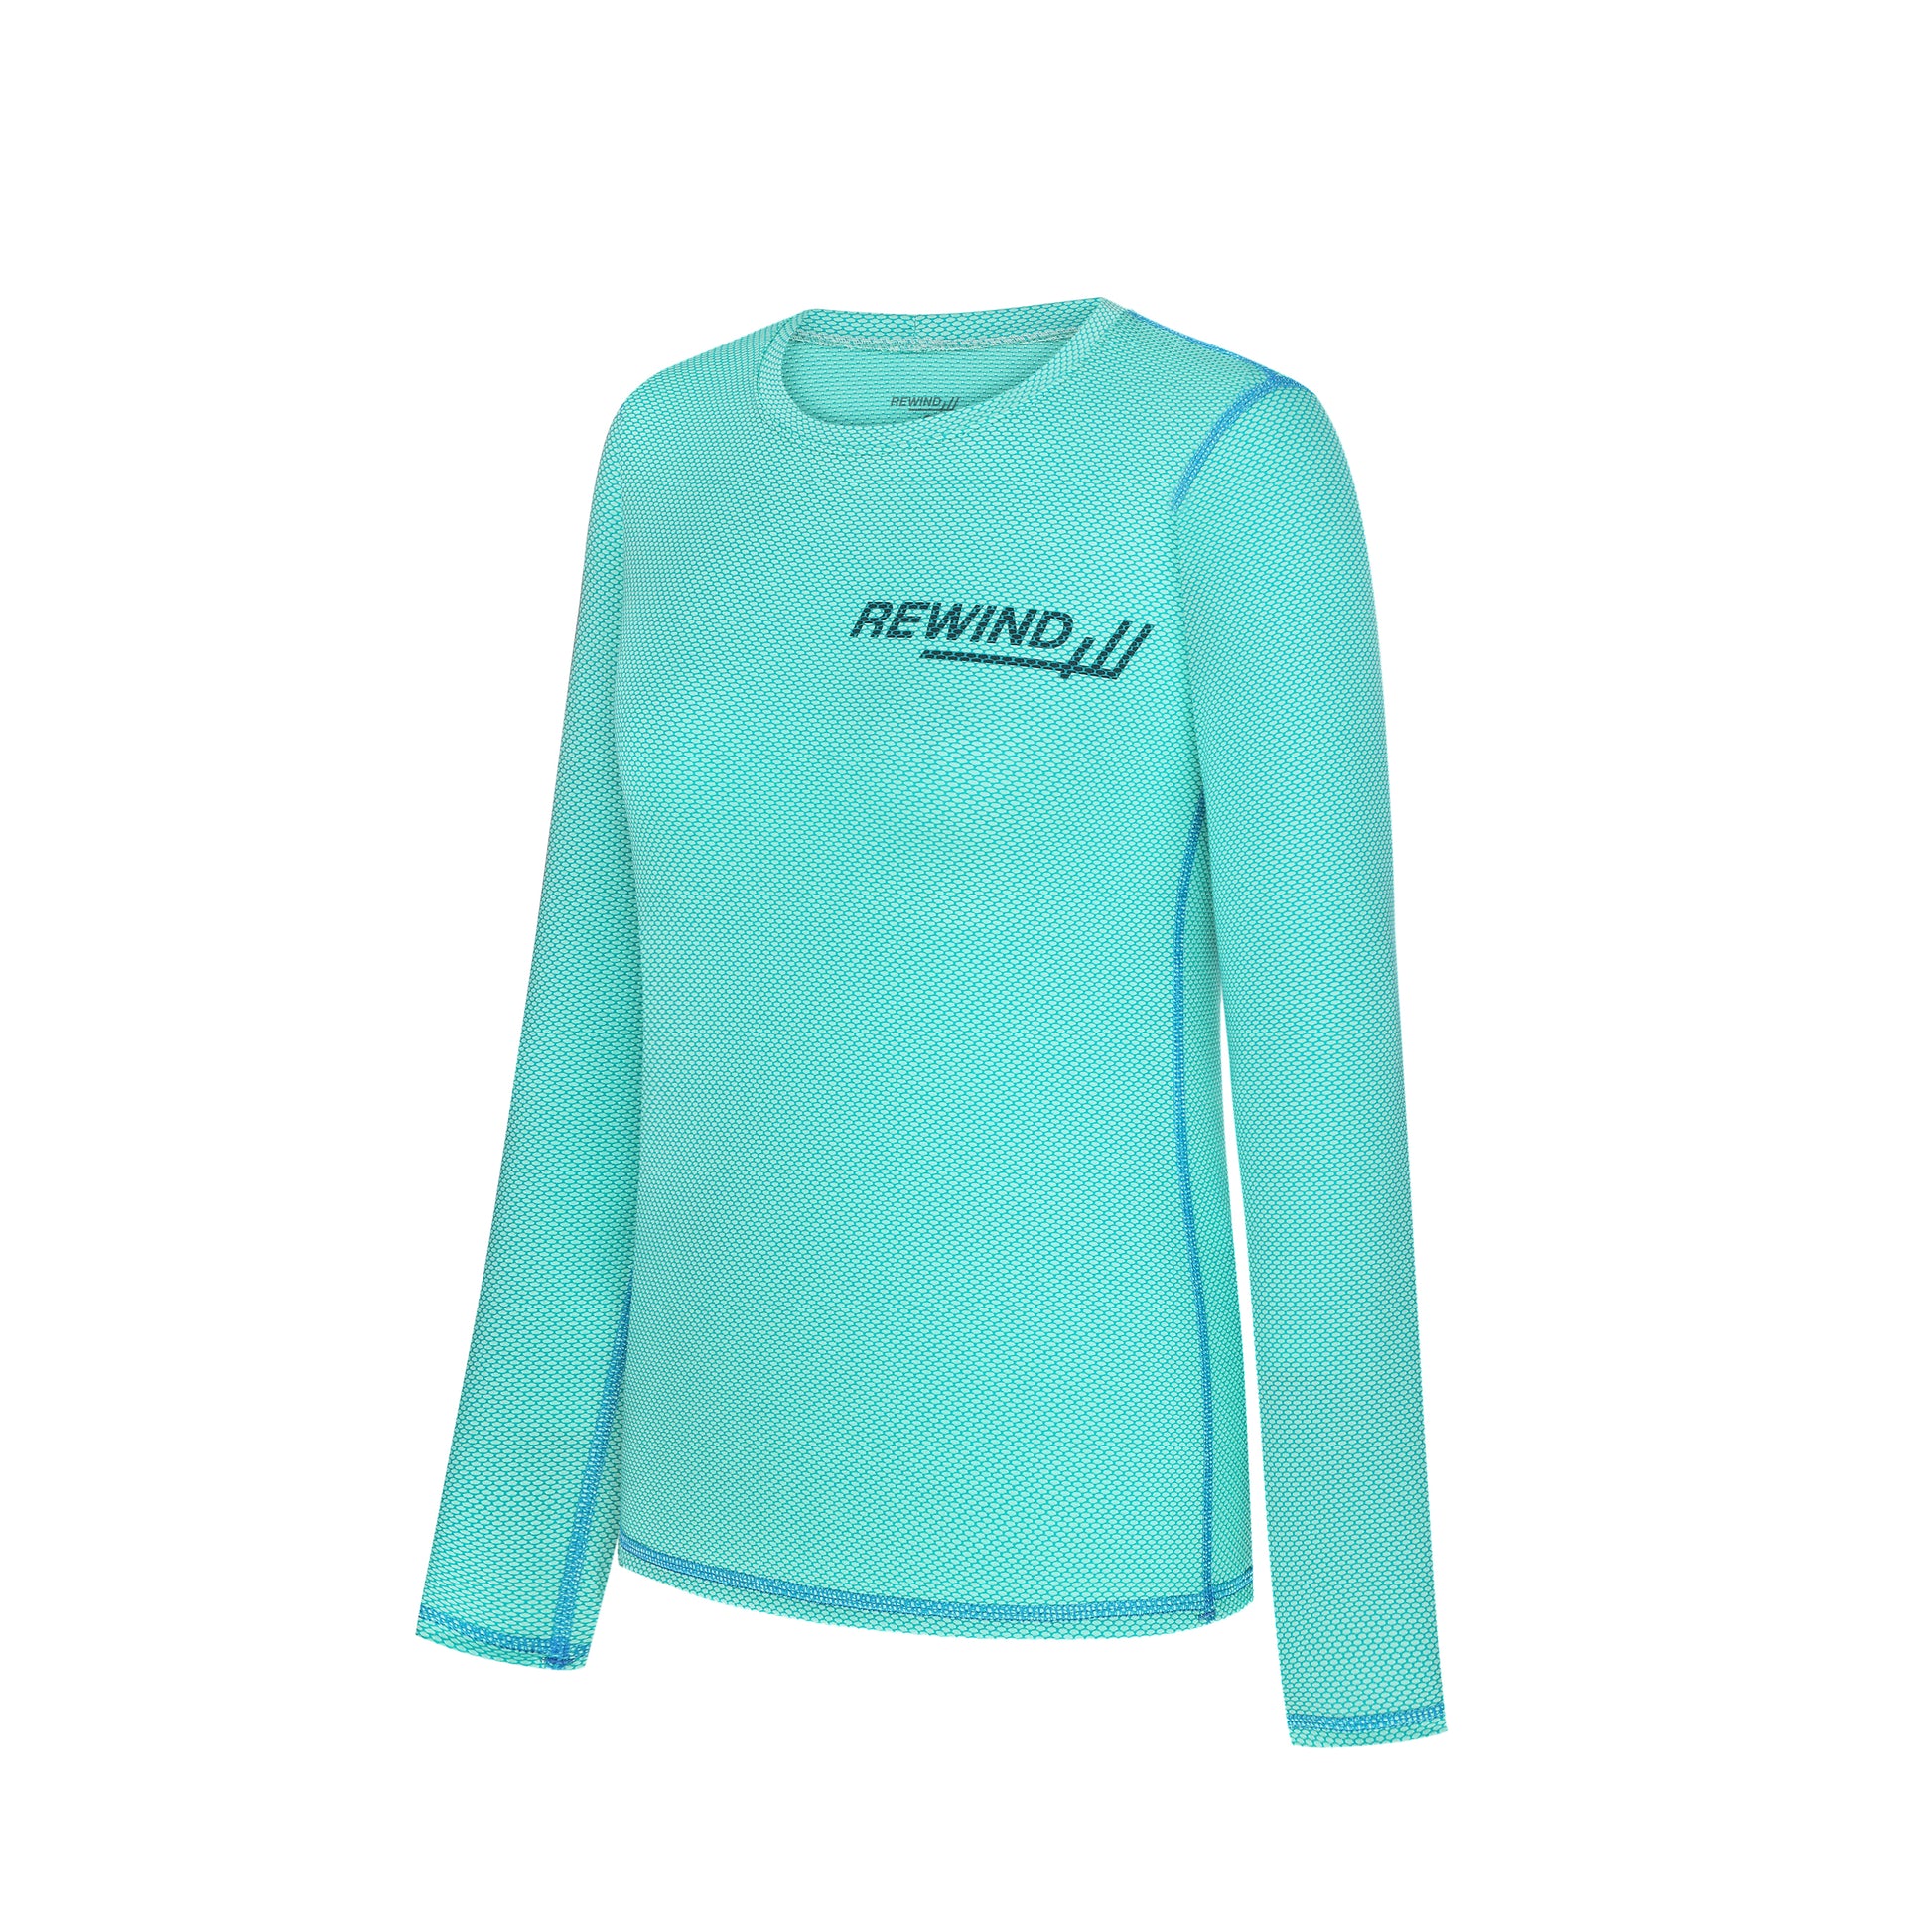 Green/blue cooling women's shirt with long sleeves from Ukrainian brand REwind